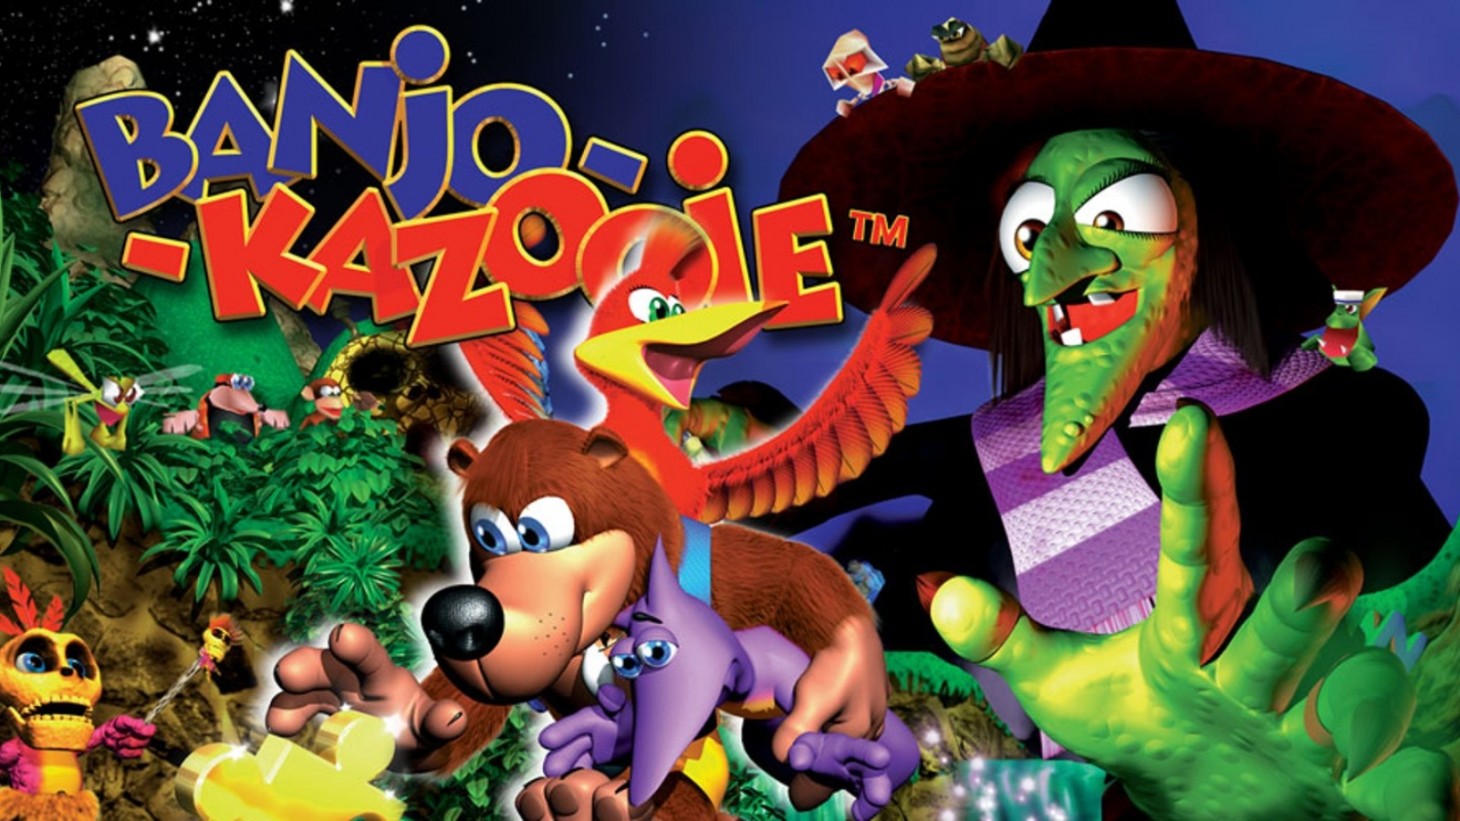 Banjo-Kazooie comes to Nintendo Switch Online this week